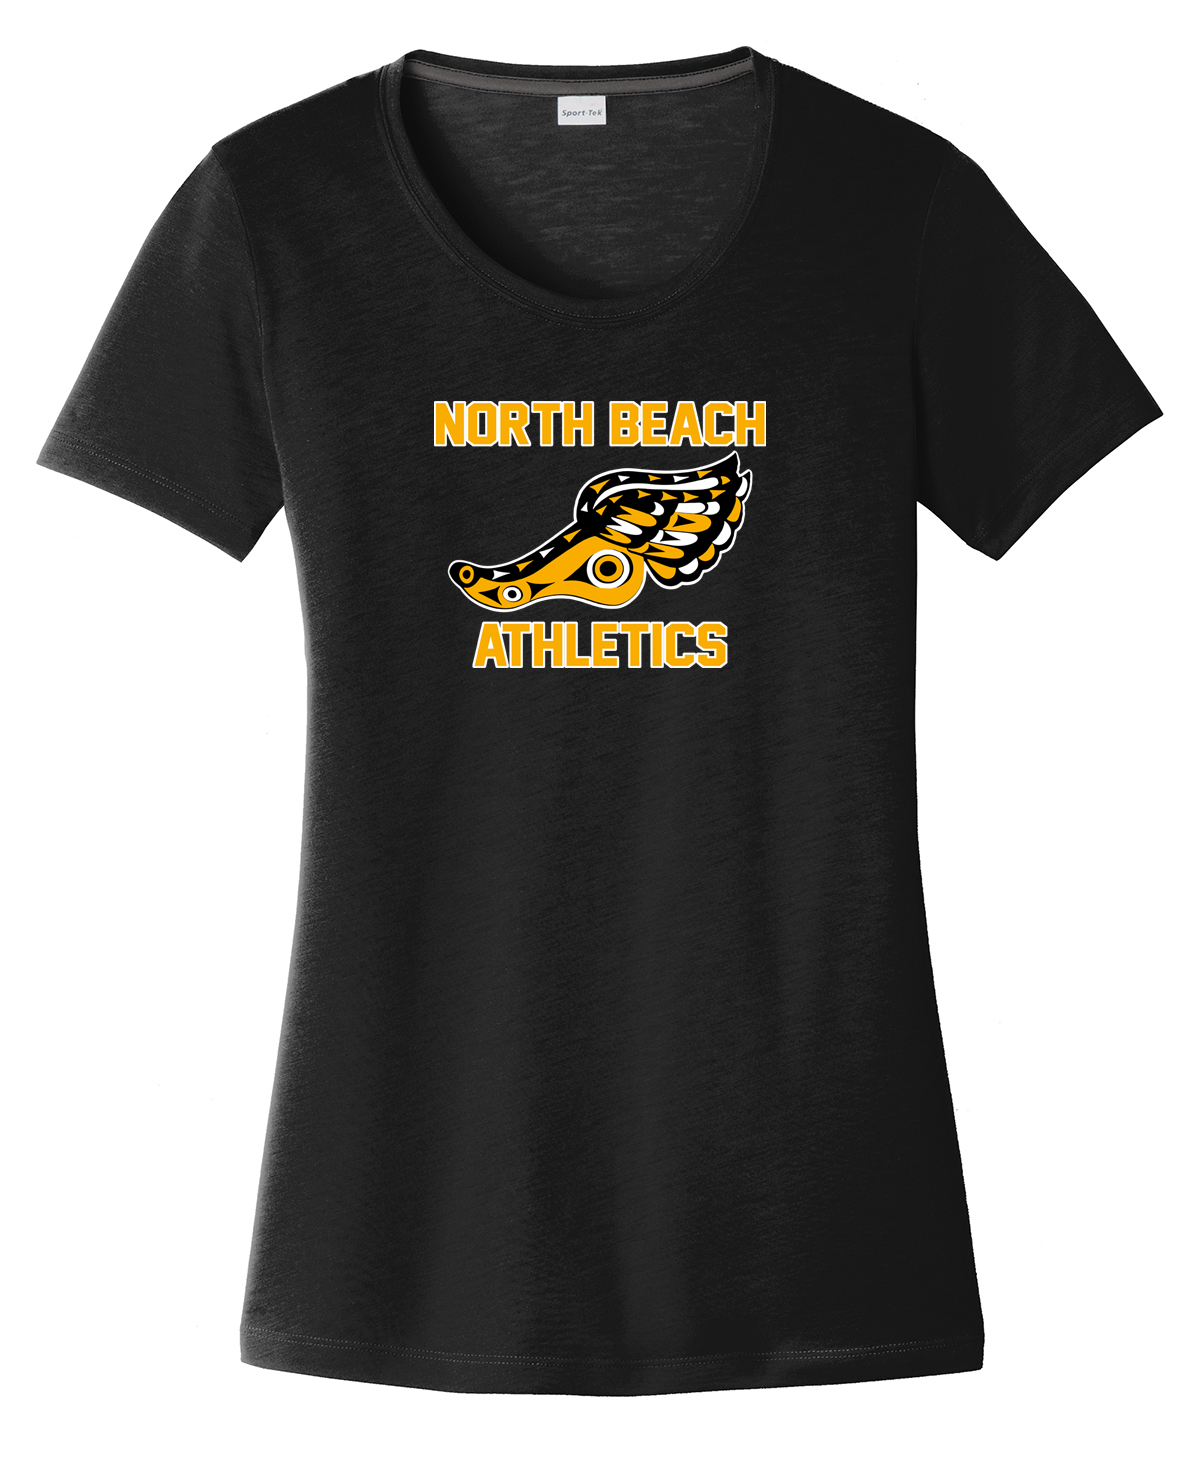 North Beach Athletics Women's CottonTouch Performance T-Shirt